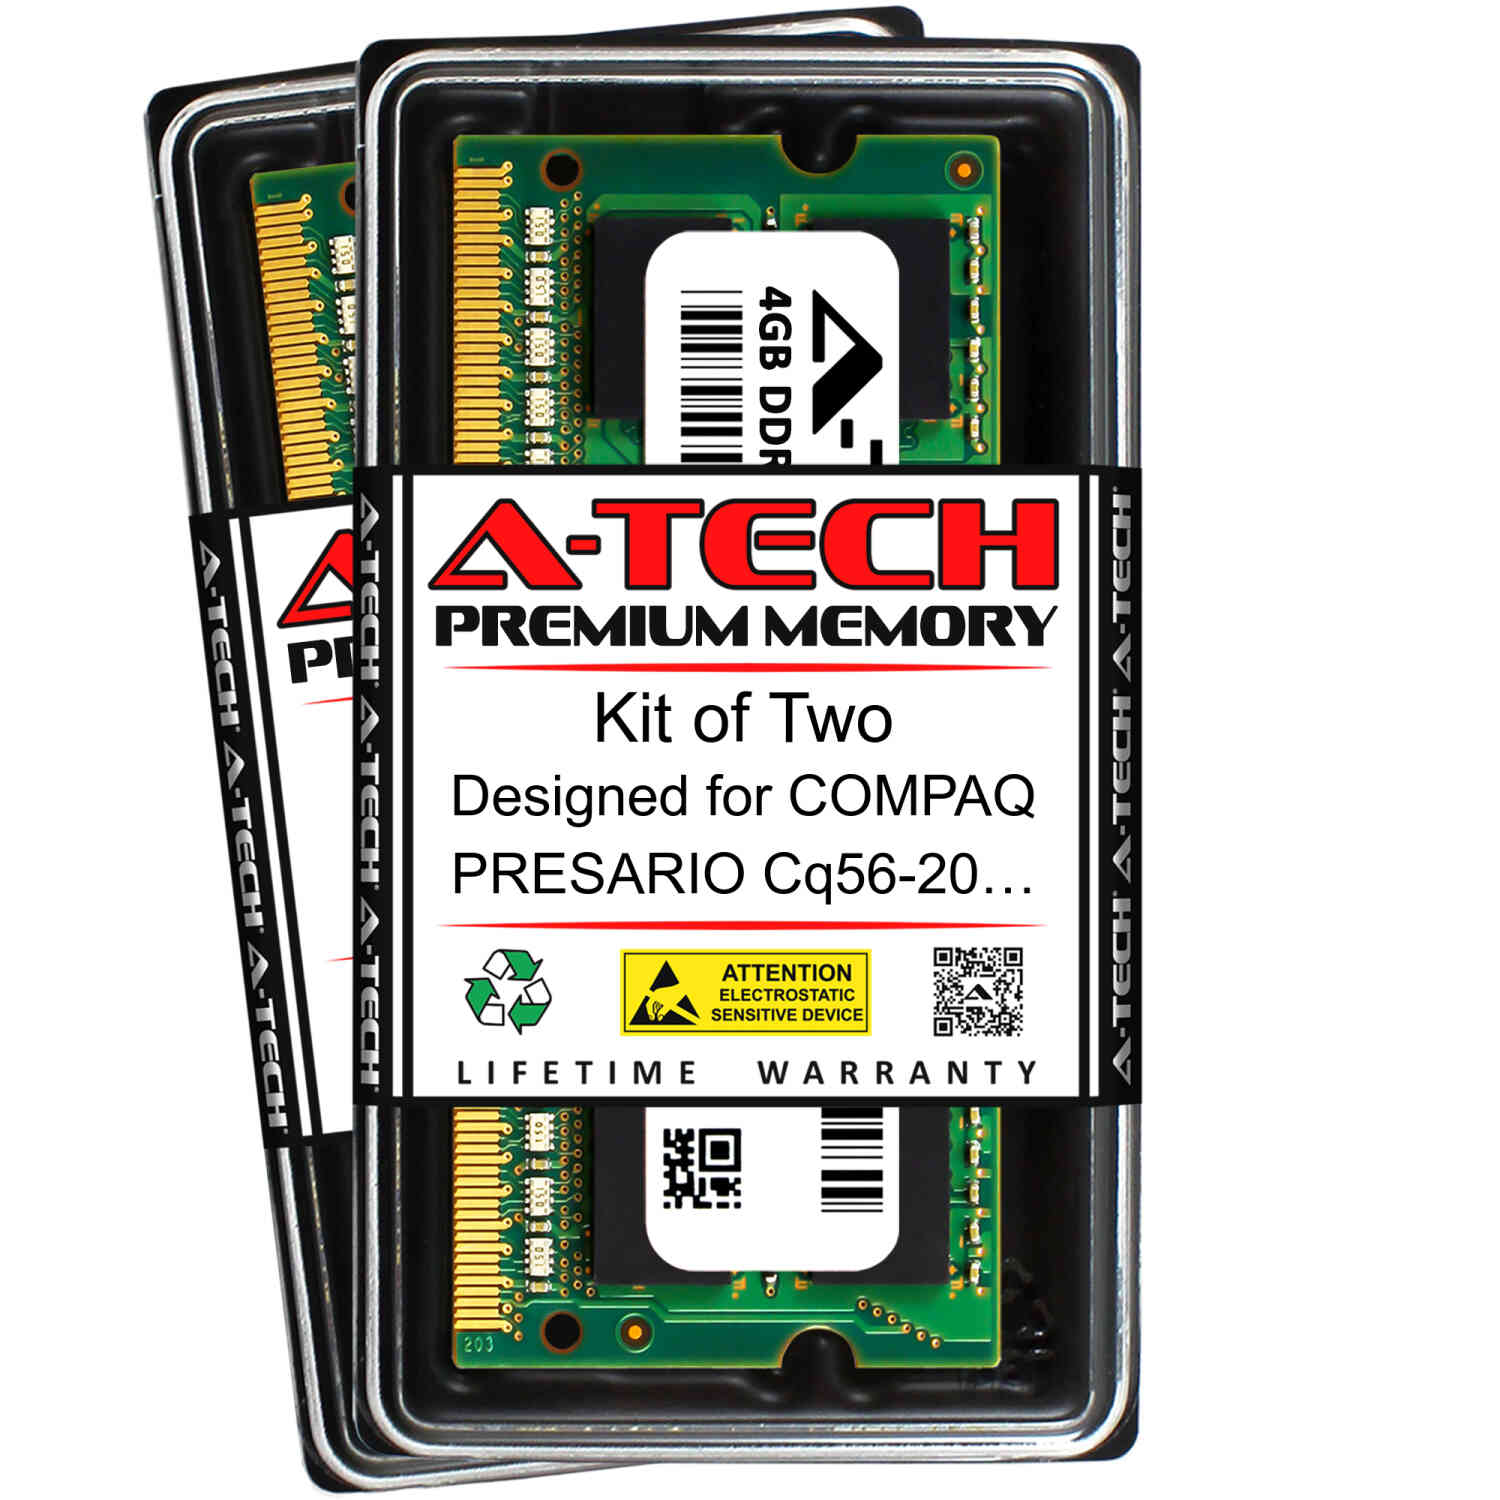 AMD DDR3 8GB 2X4GB RAM Memory for Compaq Presario CQ50 Series Presario CQ56 Black Diamond Memory Module DDR3 SO-DIMM 204pin PC3-10600 1333MHz Upgrade 